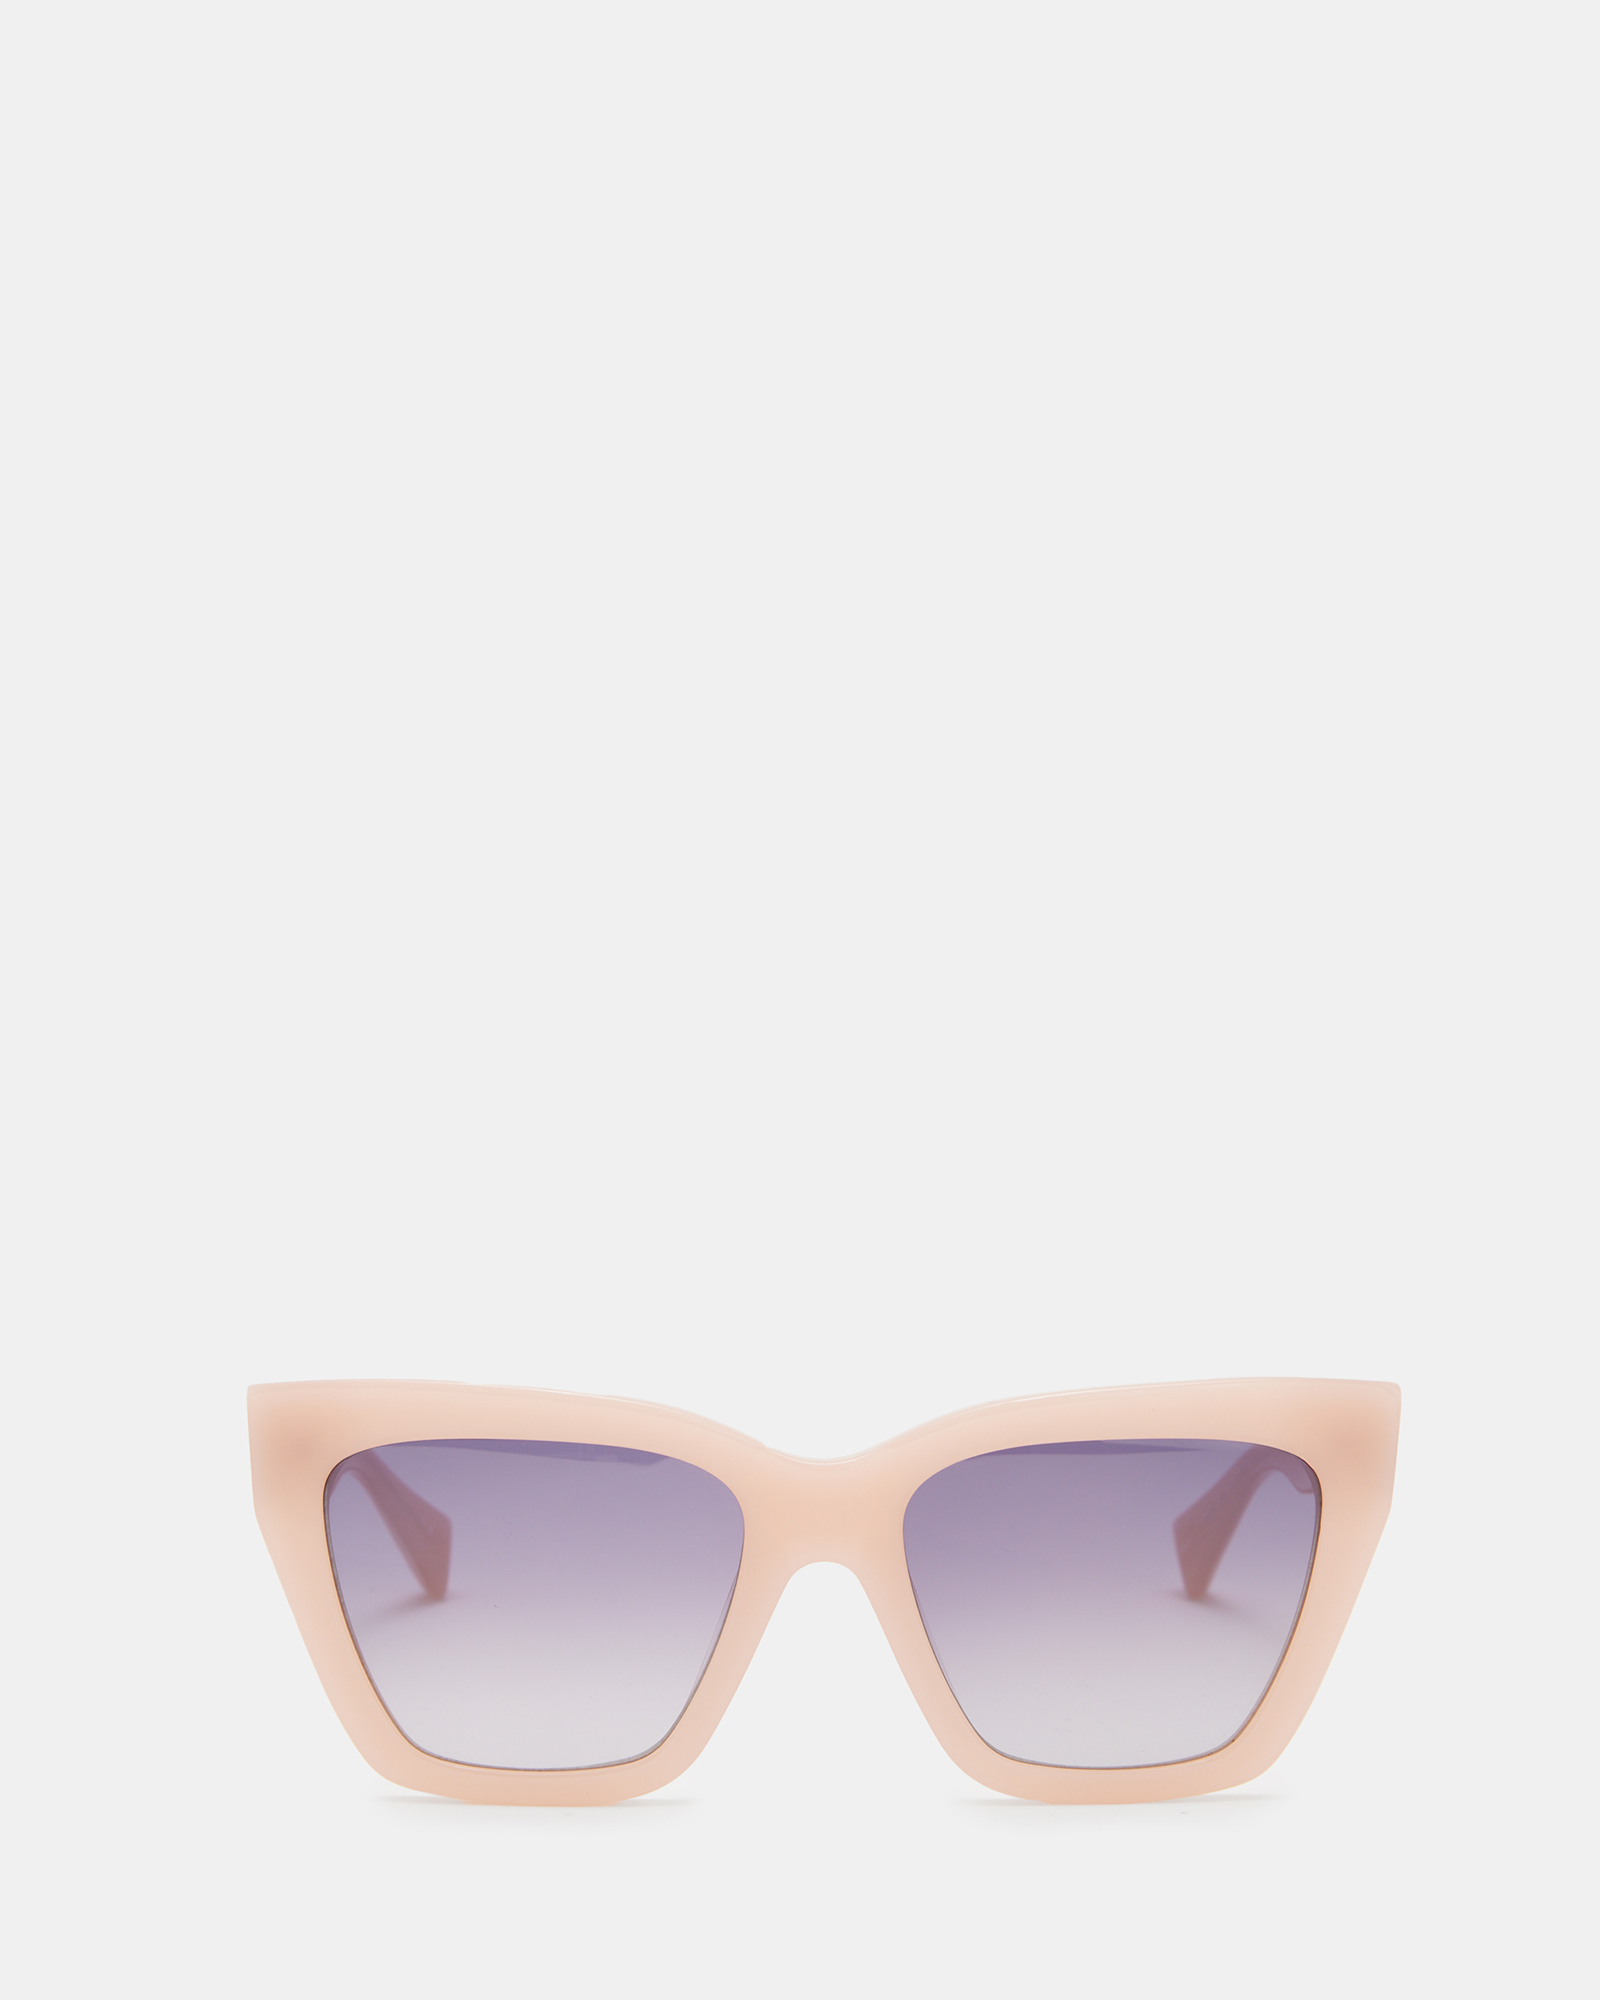 AllSaints Minerva Square Cat Eye Sunglasses,, Pink, Size: One Size